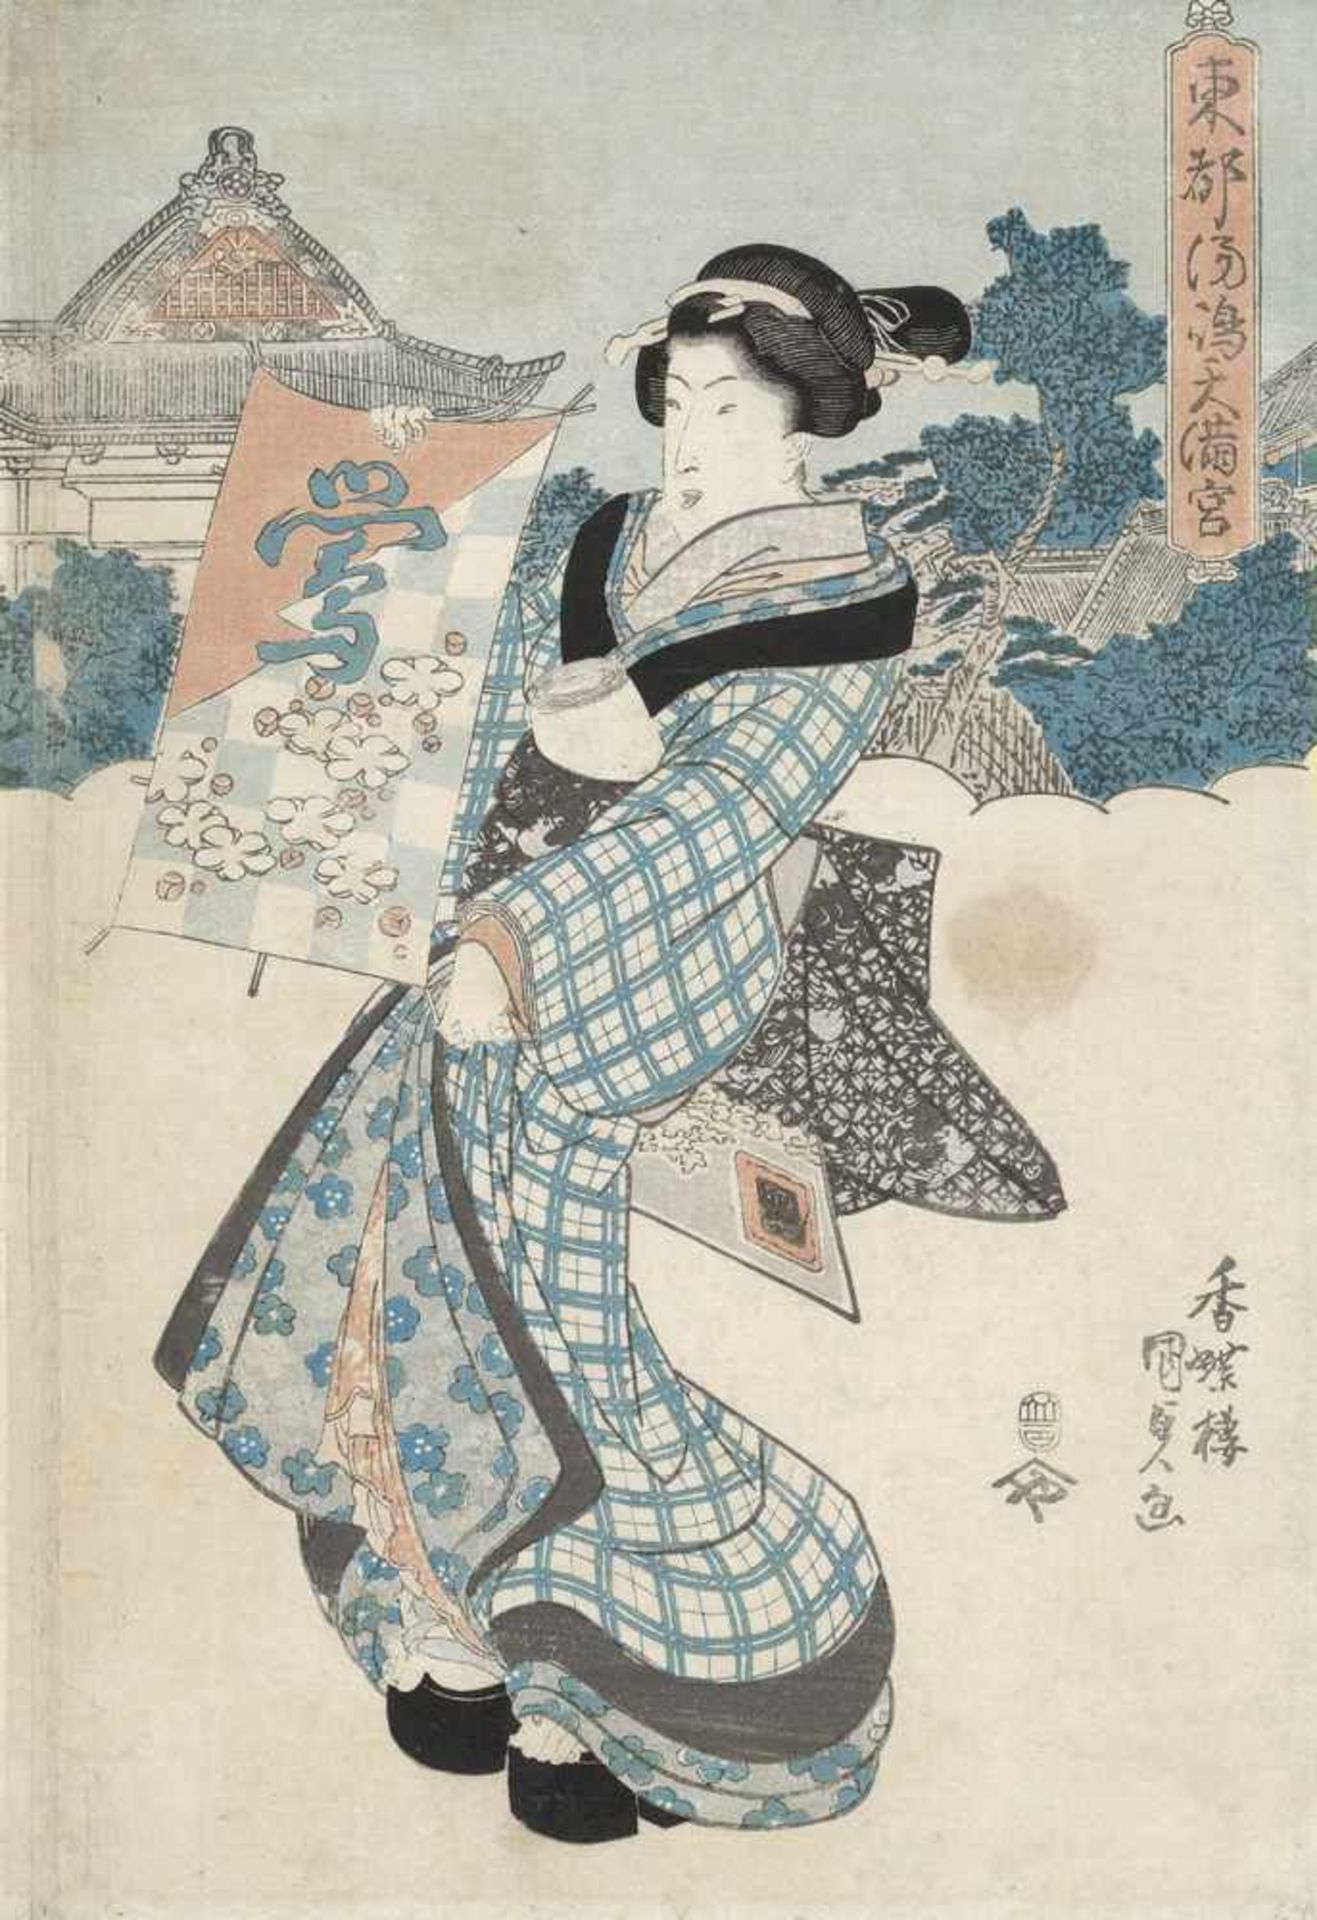 Kunisada, Utagawa: Tōto yu Shima tenmangū Kunisada, Utagawa. Tōto yu Shima tenmangū. Triptychon - Image 3 of 3